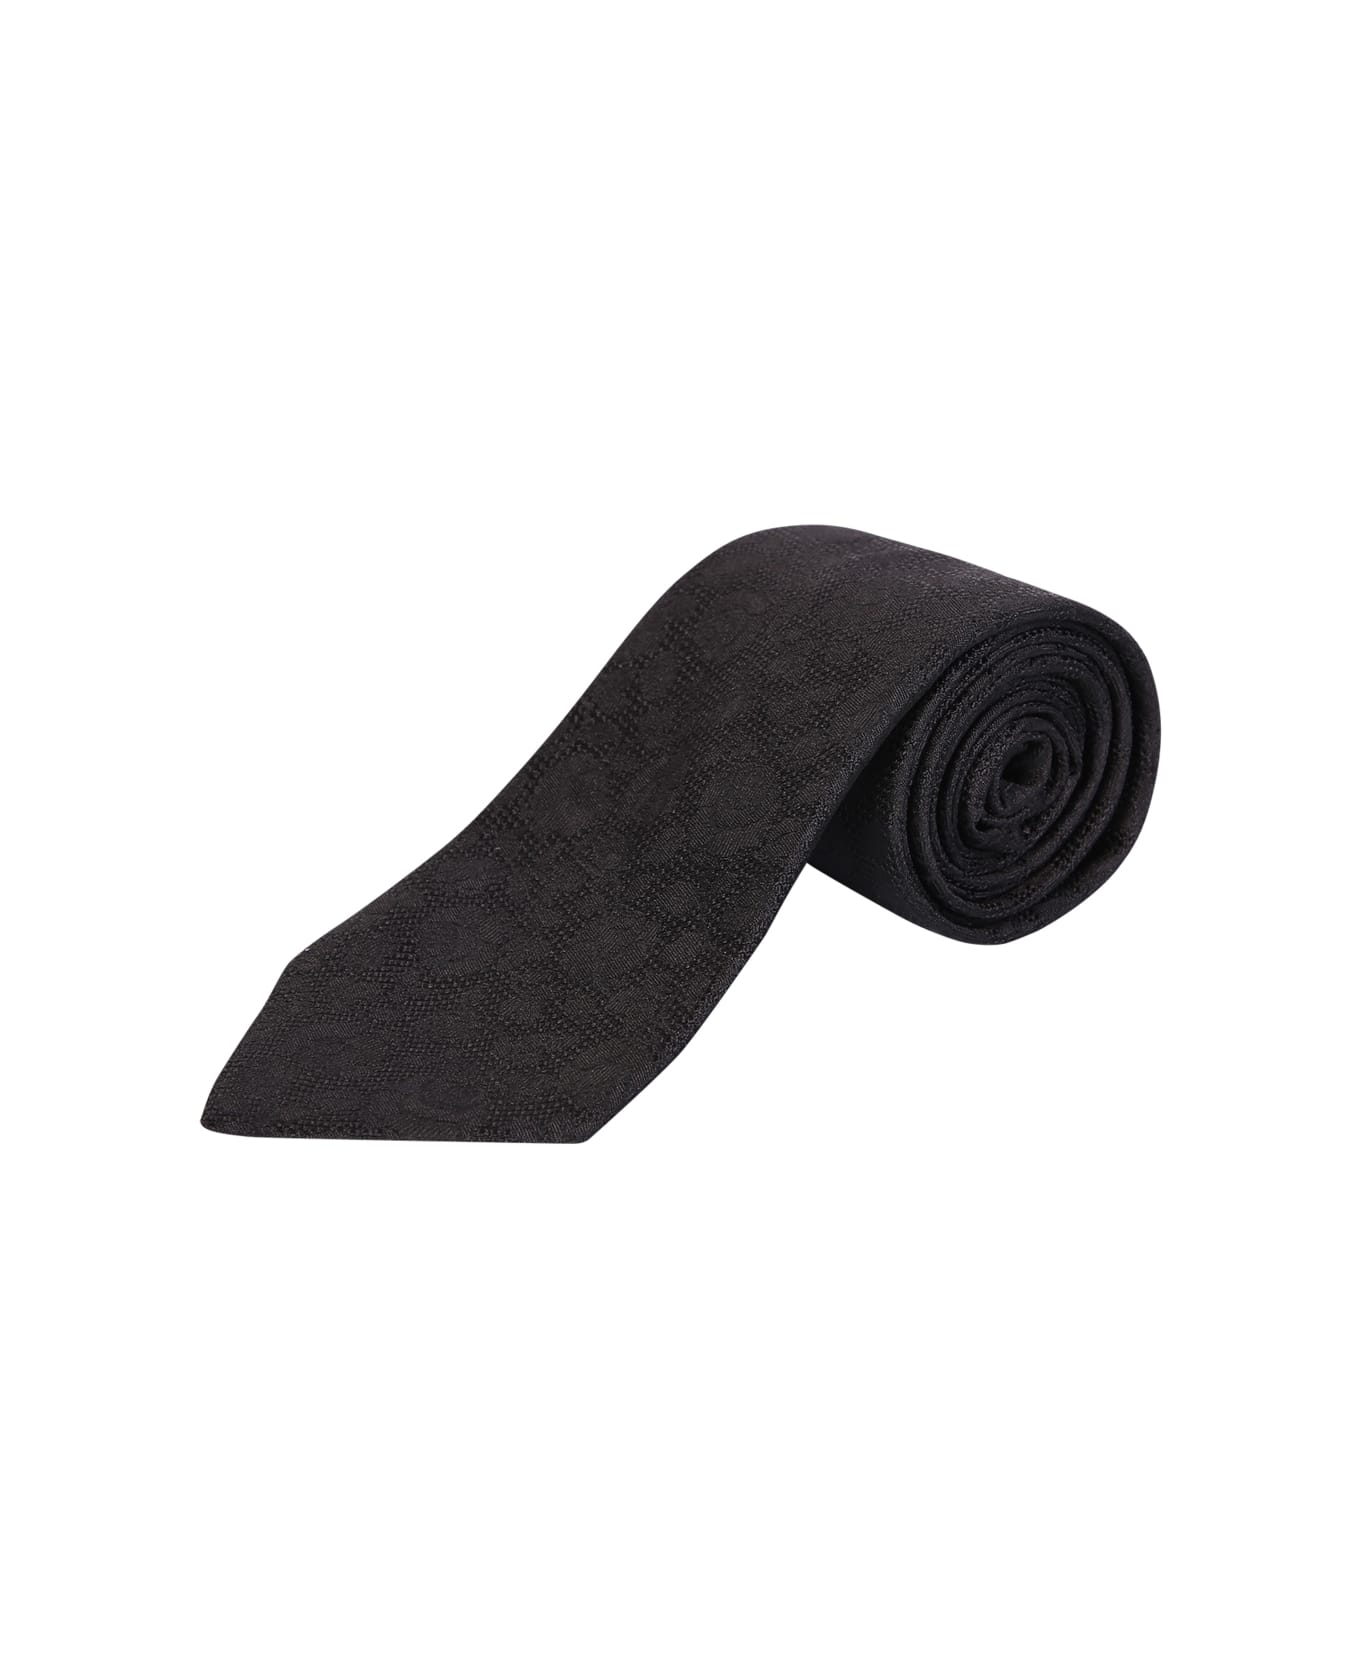 Paul Smith Black Silk Tie - Black